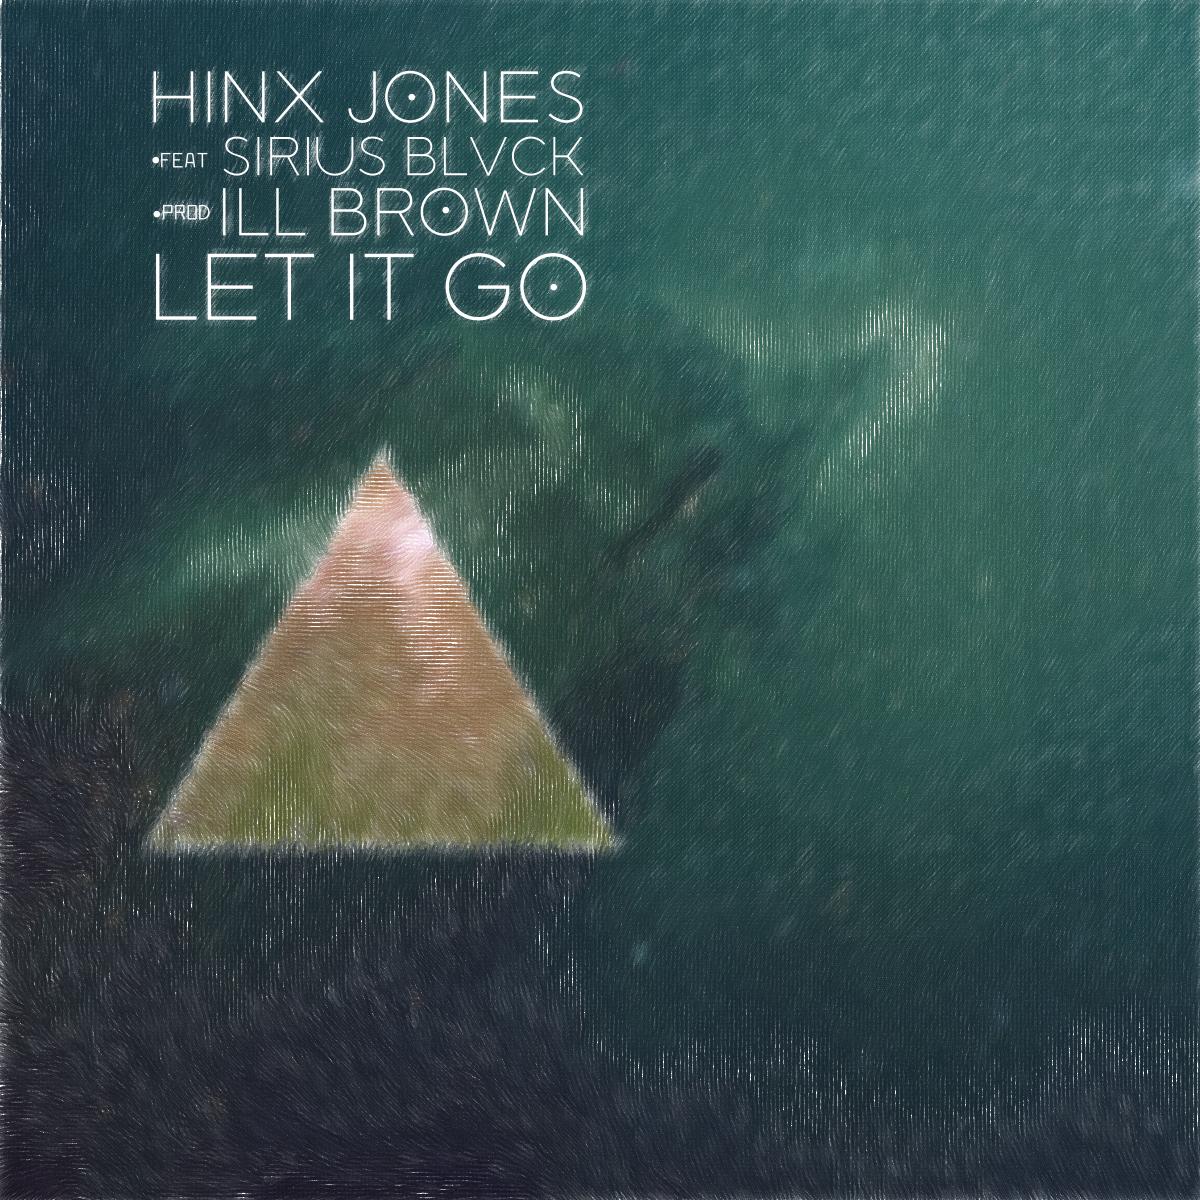 Hinx Jones - "Let It Go" ft. Sirius Blvck | @HinxJones @SiriusxBlvck @ILLBrown